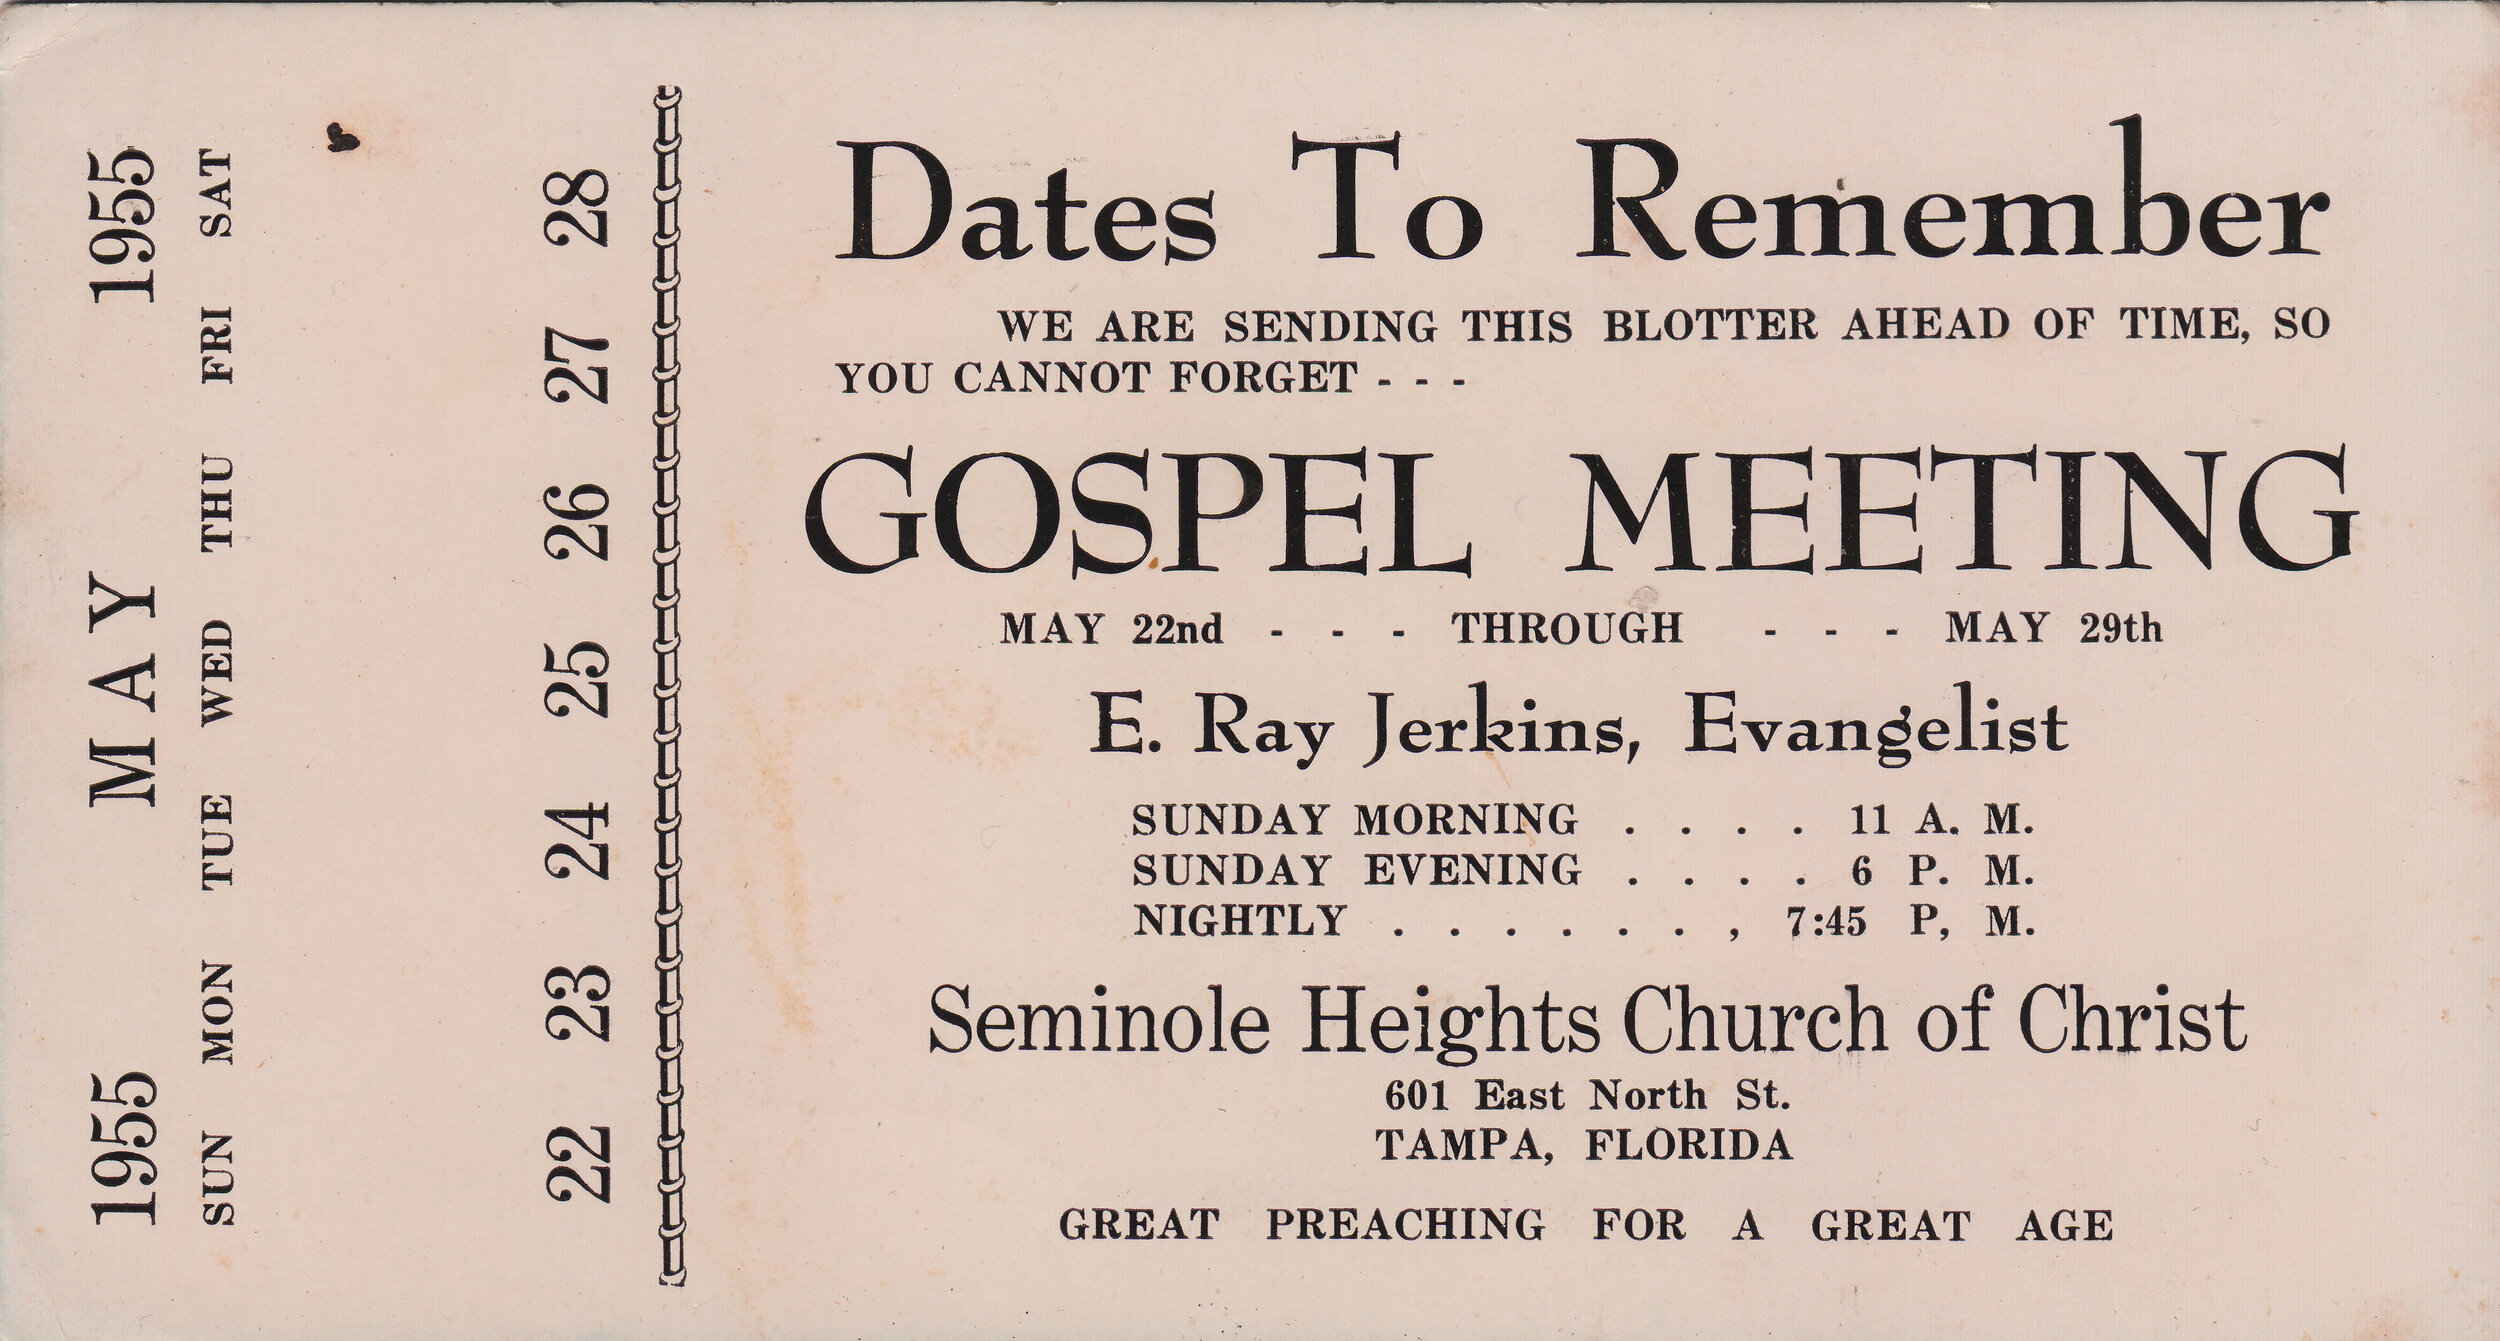 Gospel Meeting Ad, 1955